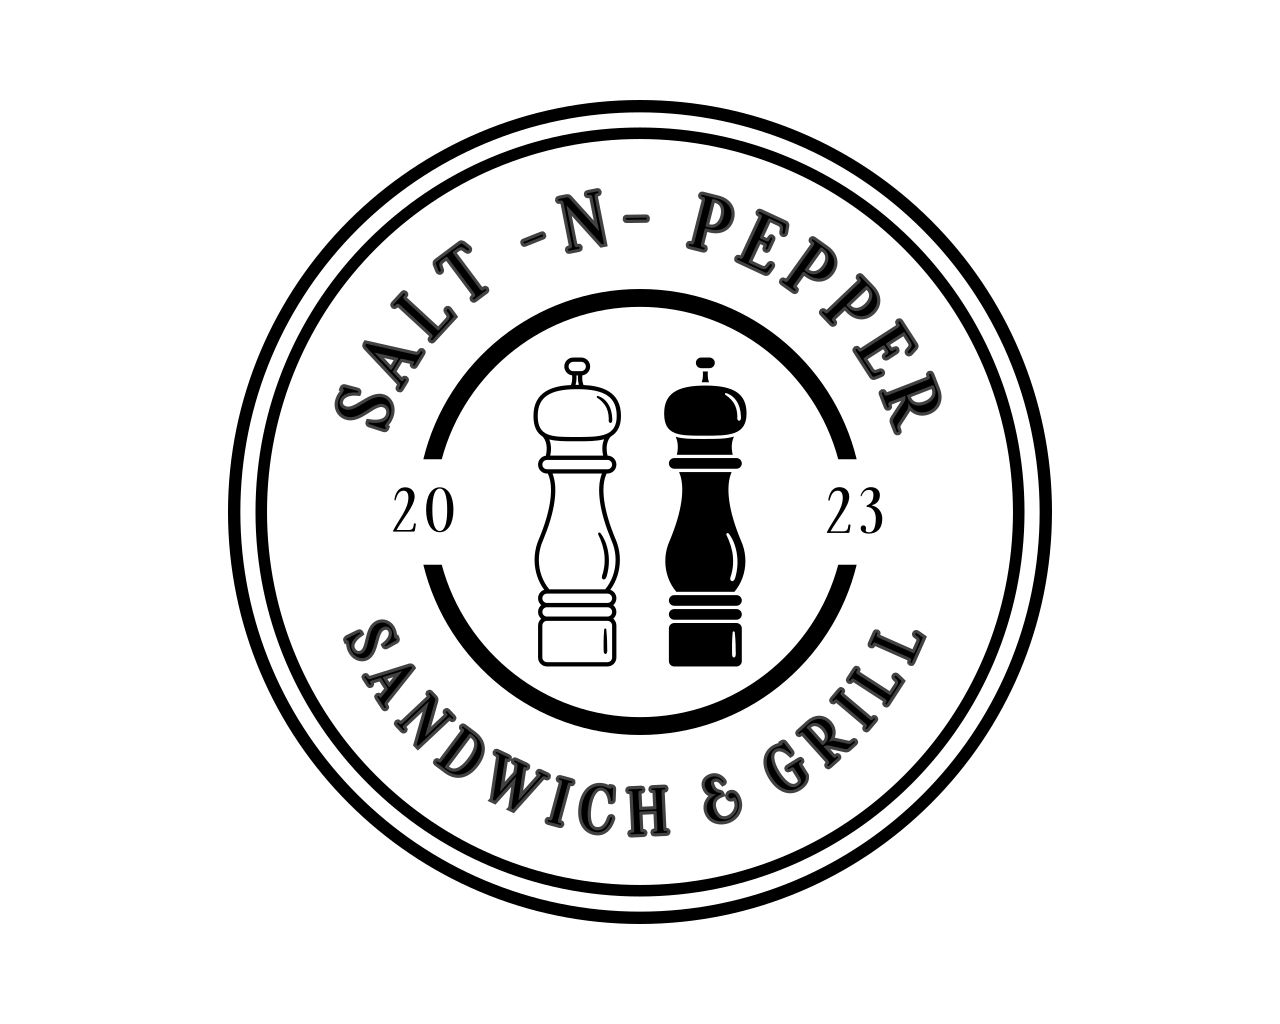 All-American sandwich shop Salt-N-Pepper Sandwich & Grill opens in Fairfax  – Marin Independent Journal